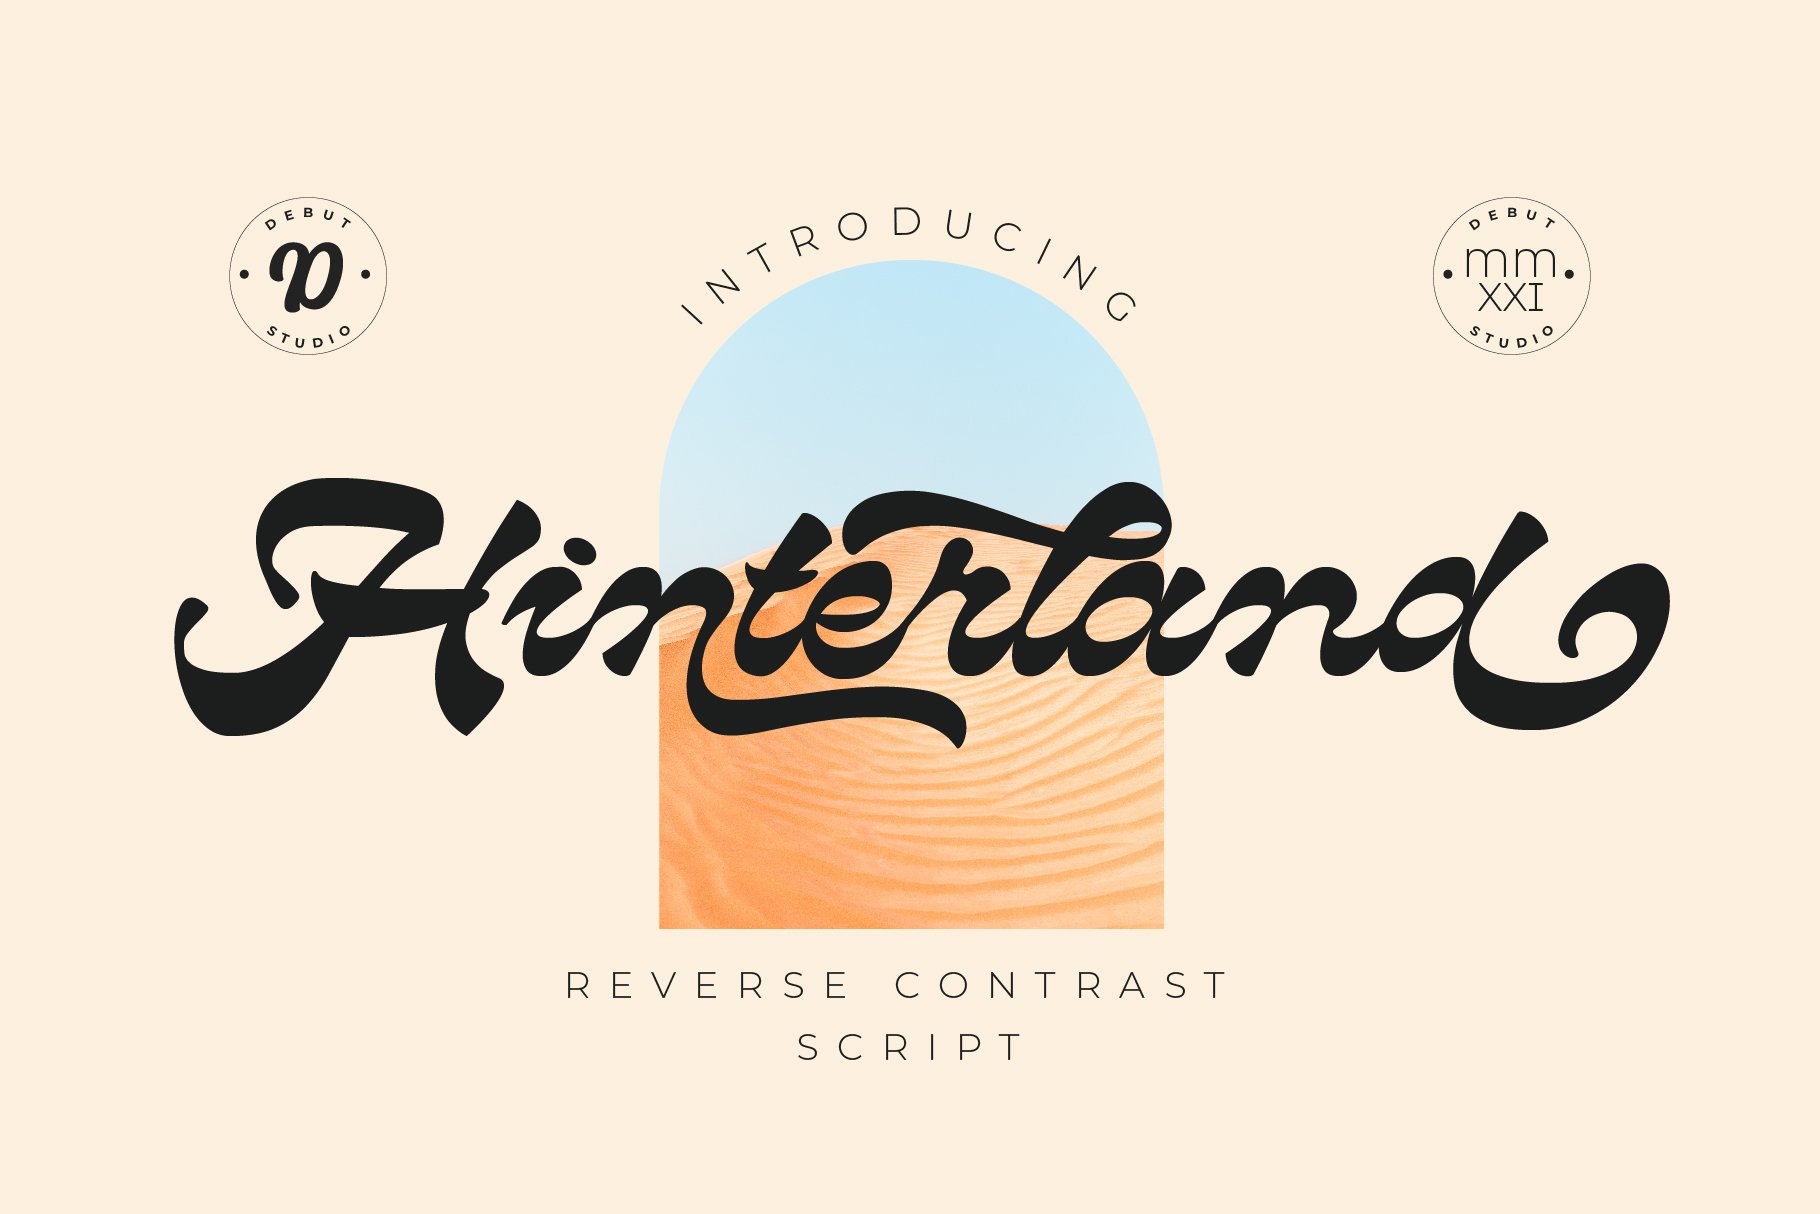 Hinterland | Reverse Contrast Script cover image.